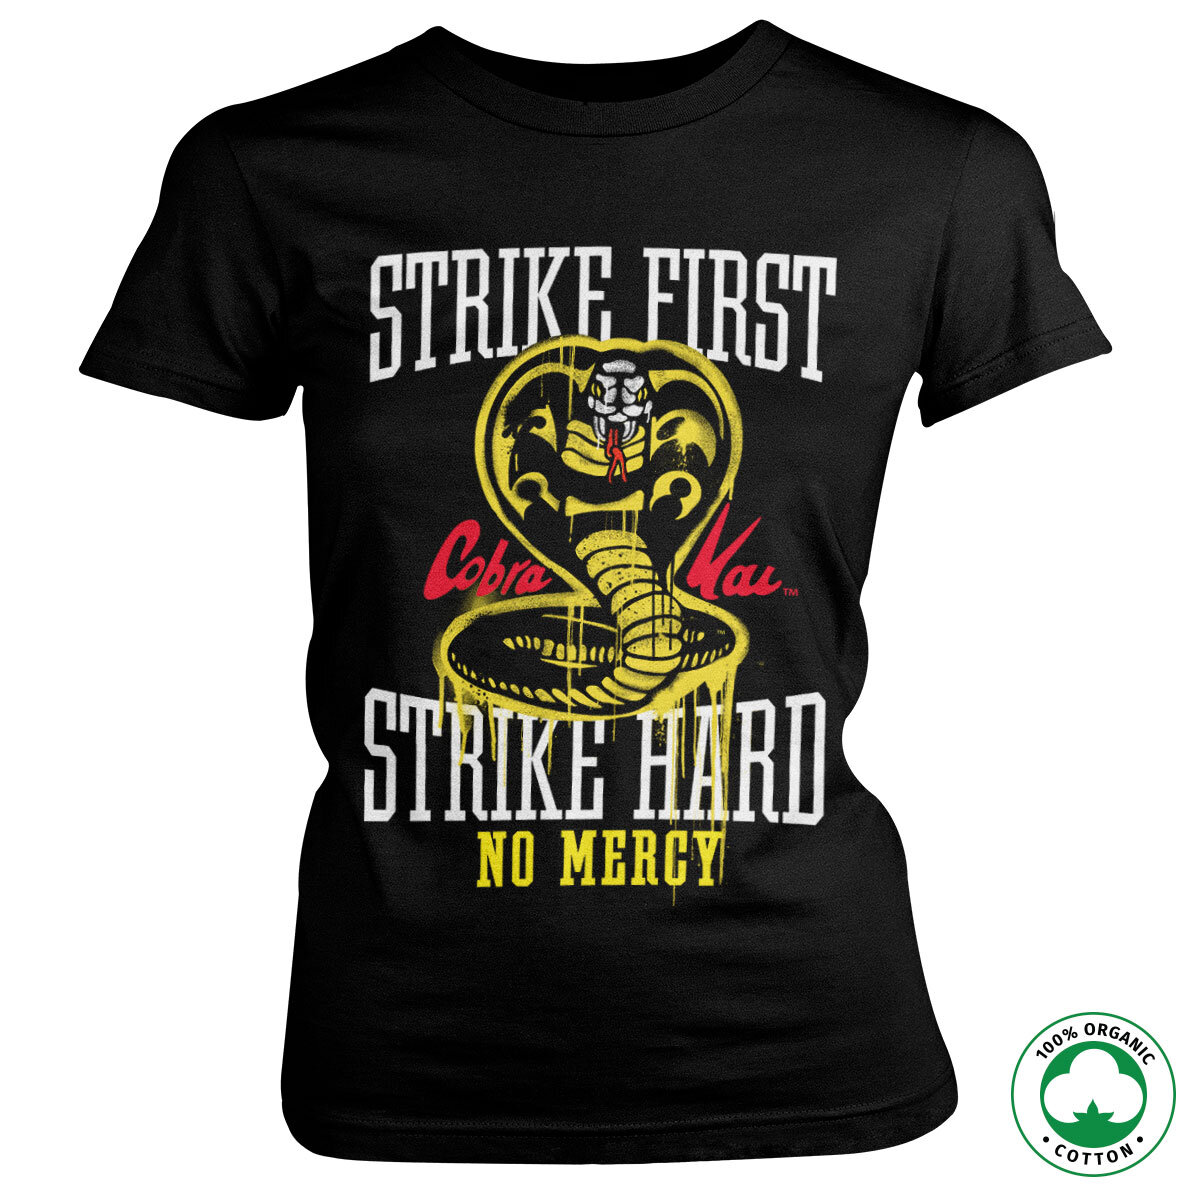 Strike First - Strike Hard - No Mercy Organic Girly Tee